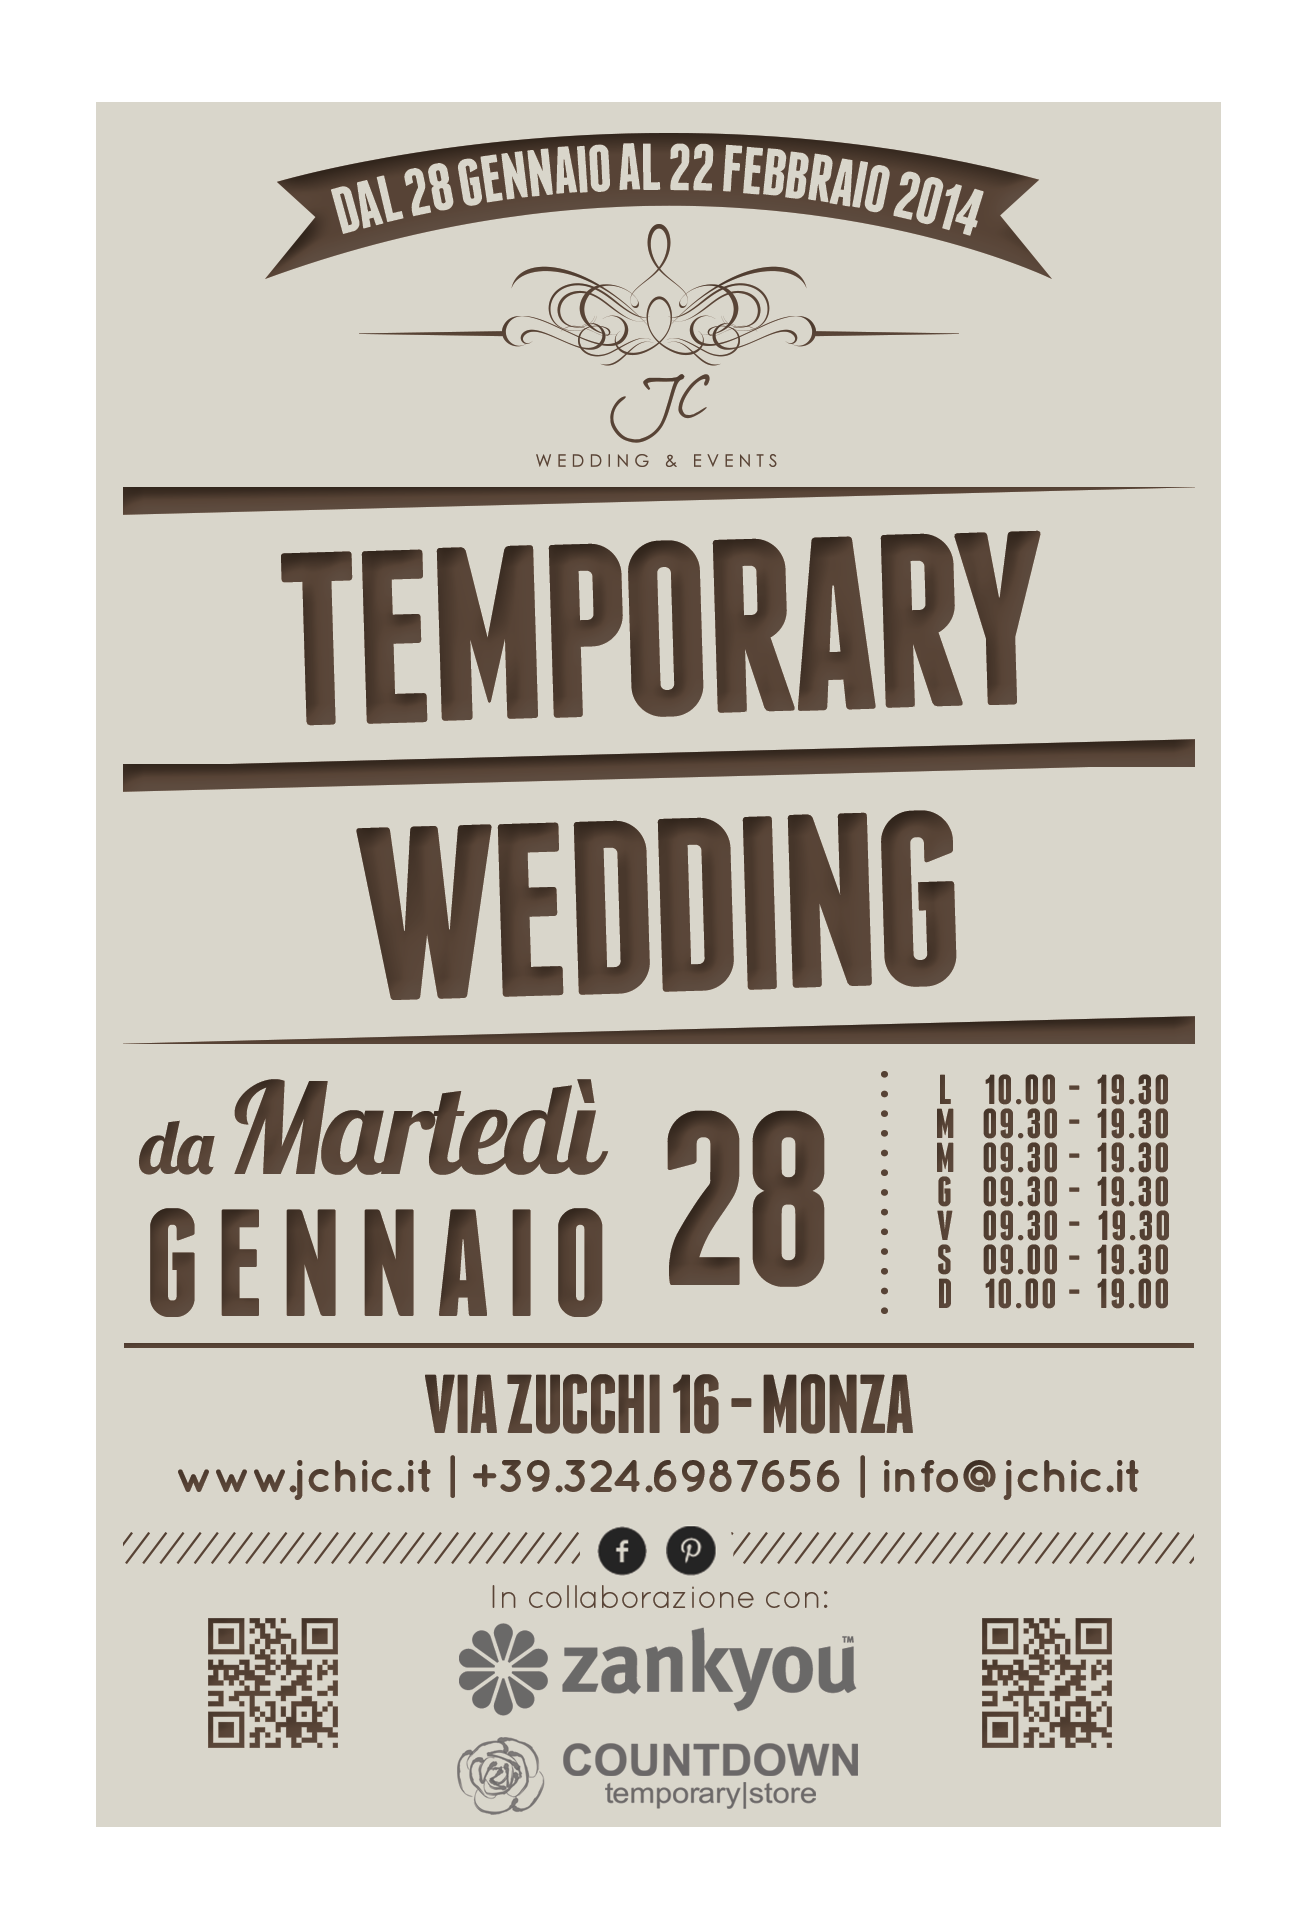 JChic Wedding & Events Temporary Wedding January 2014